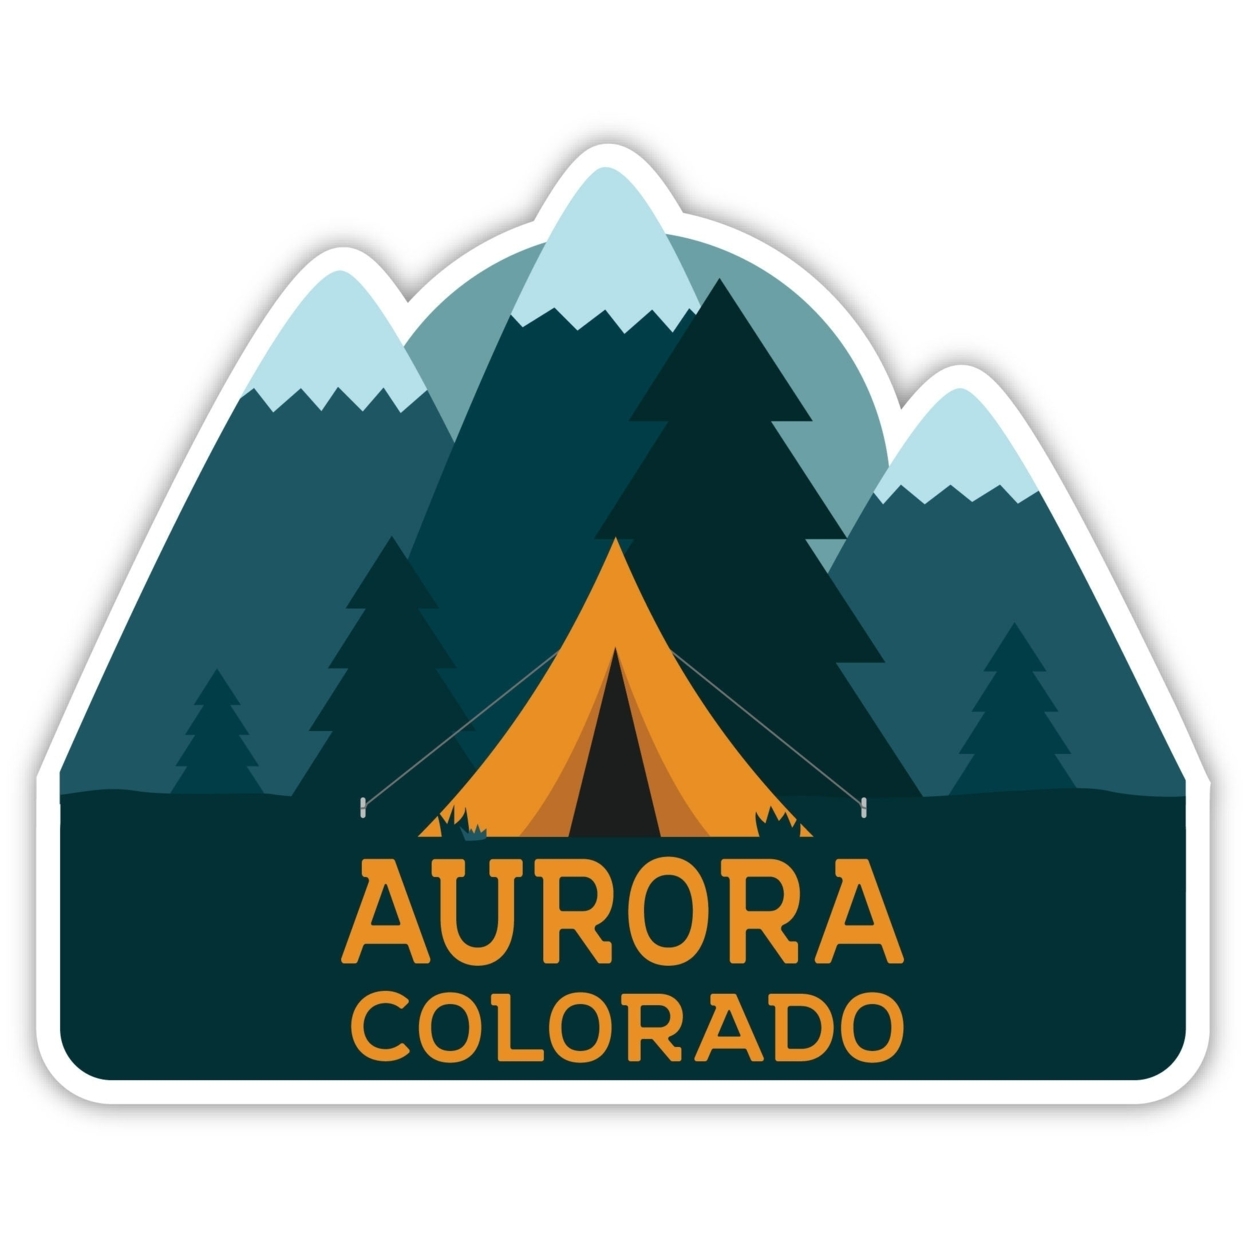 Aurora Colorado Souvenir Decorative Stickers (Choose Theme And Size) - 4-Pack, 4-Inch, Tent